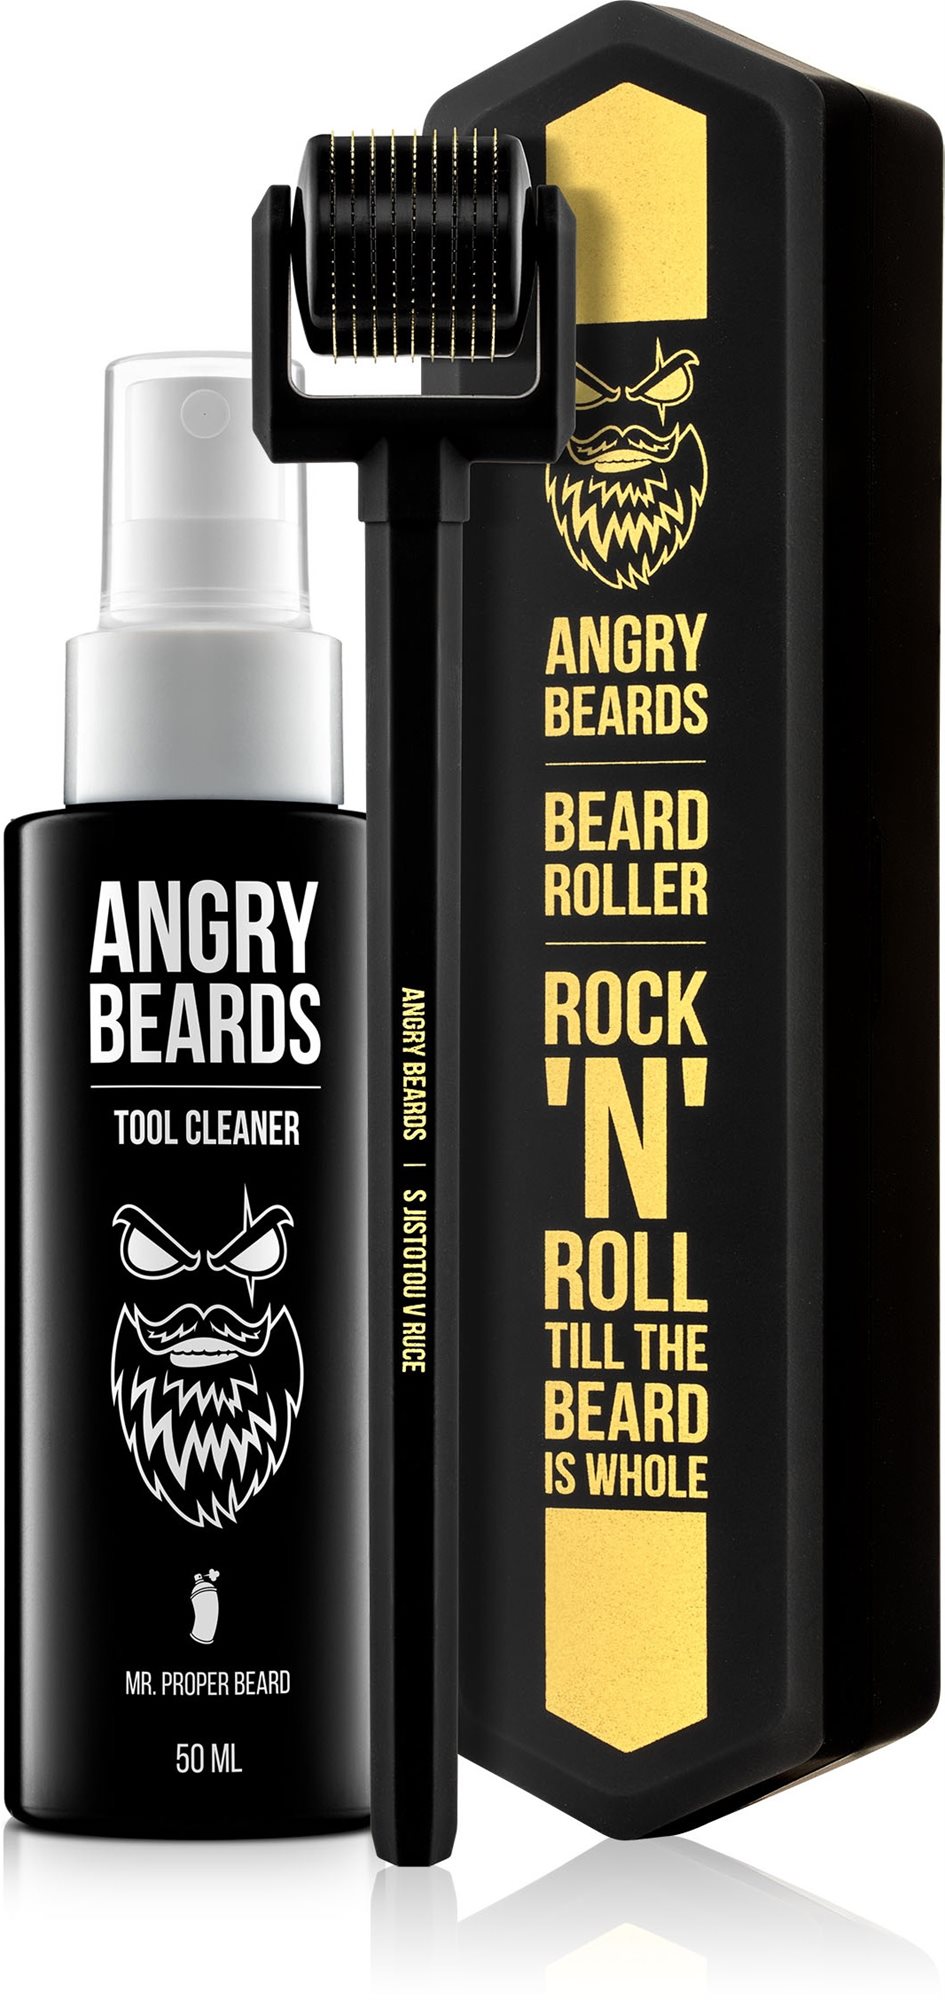 ANGRY BEARDS Beard Roller